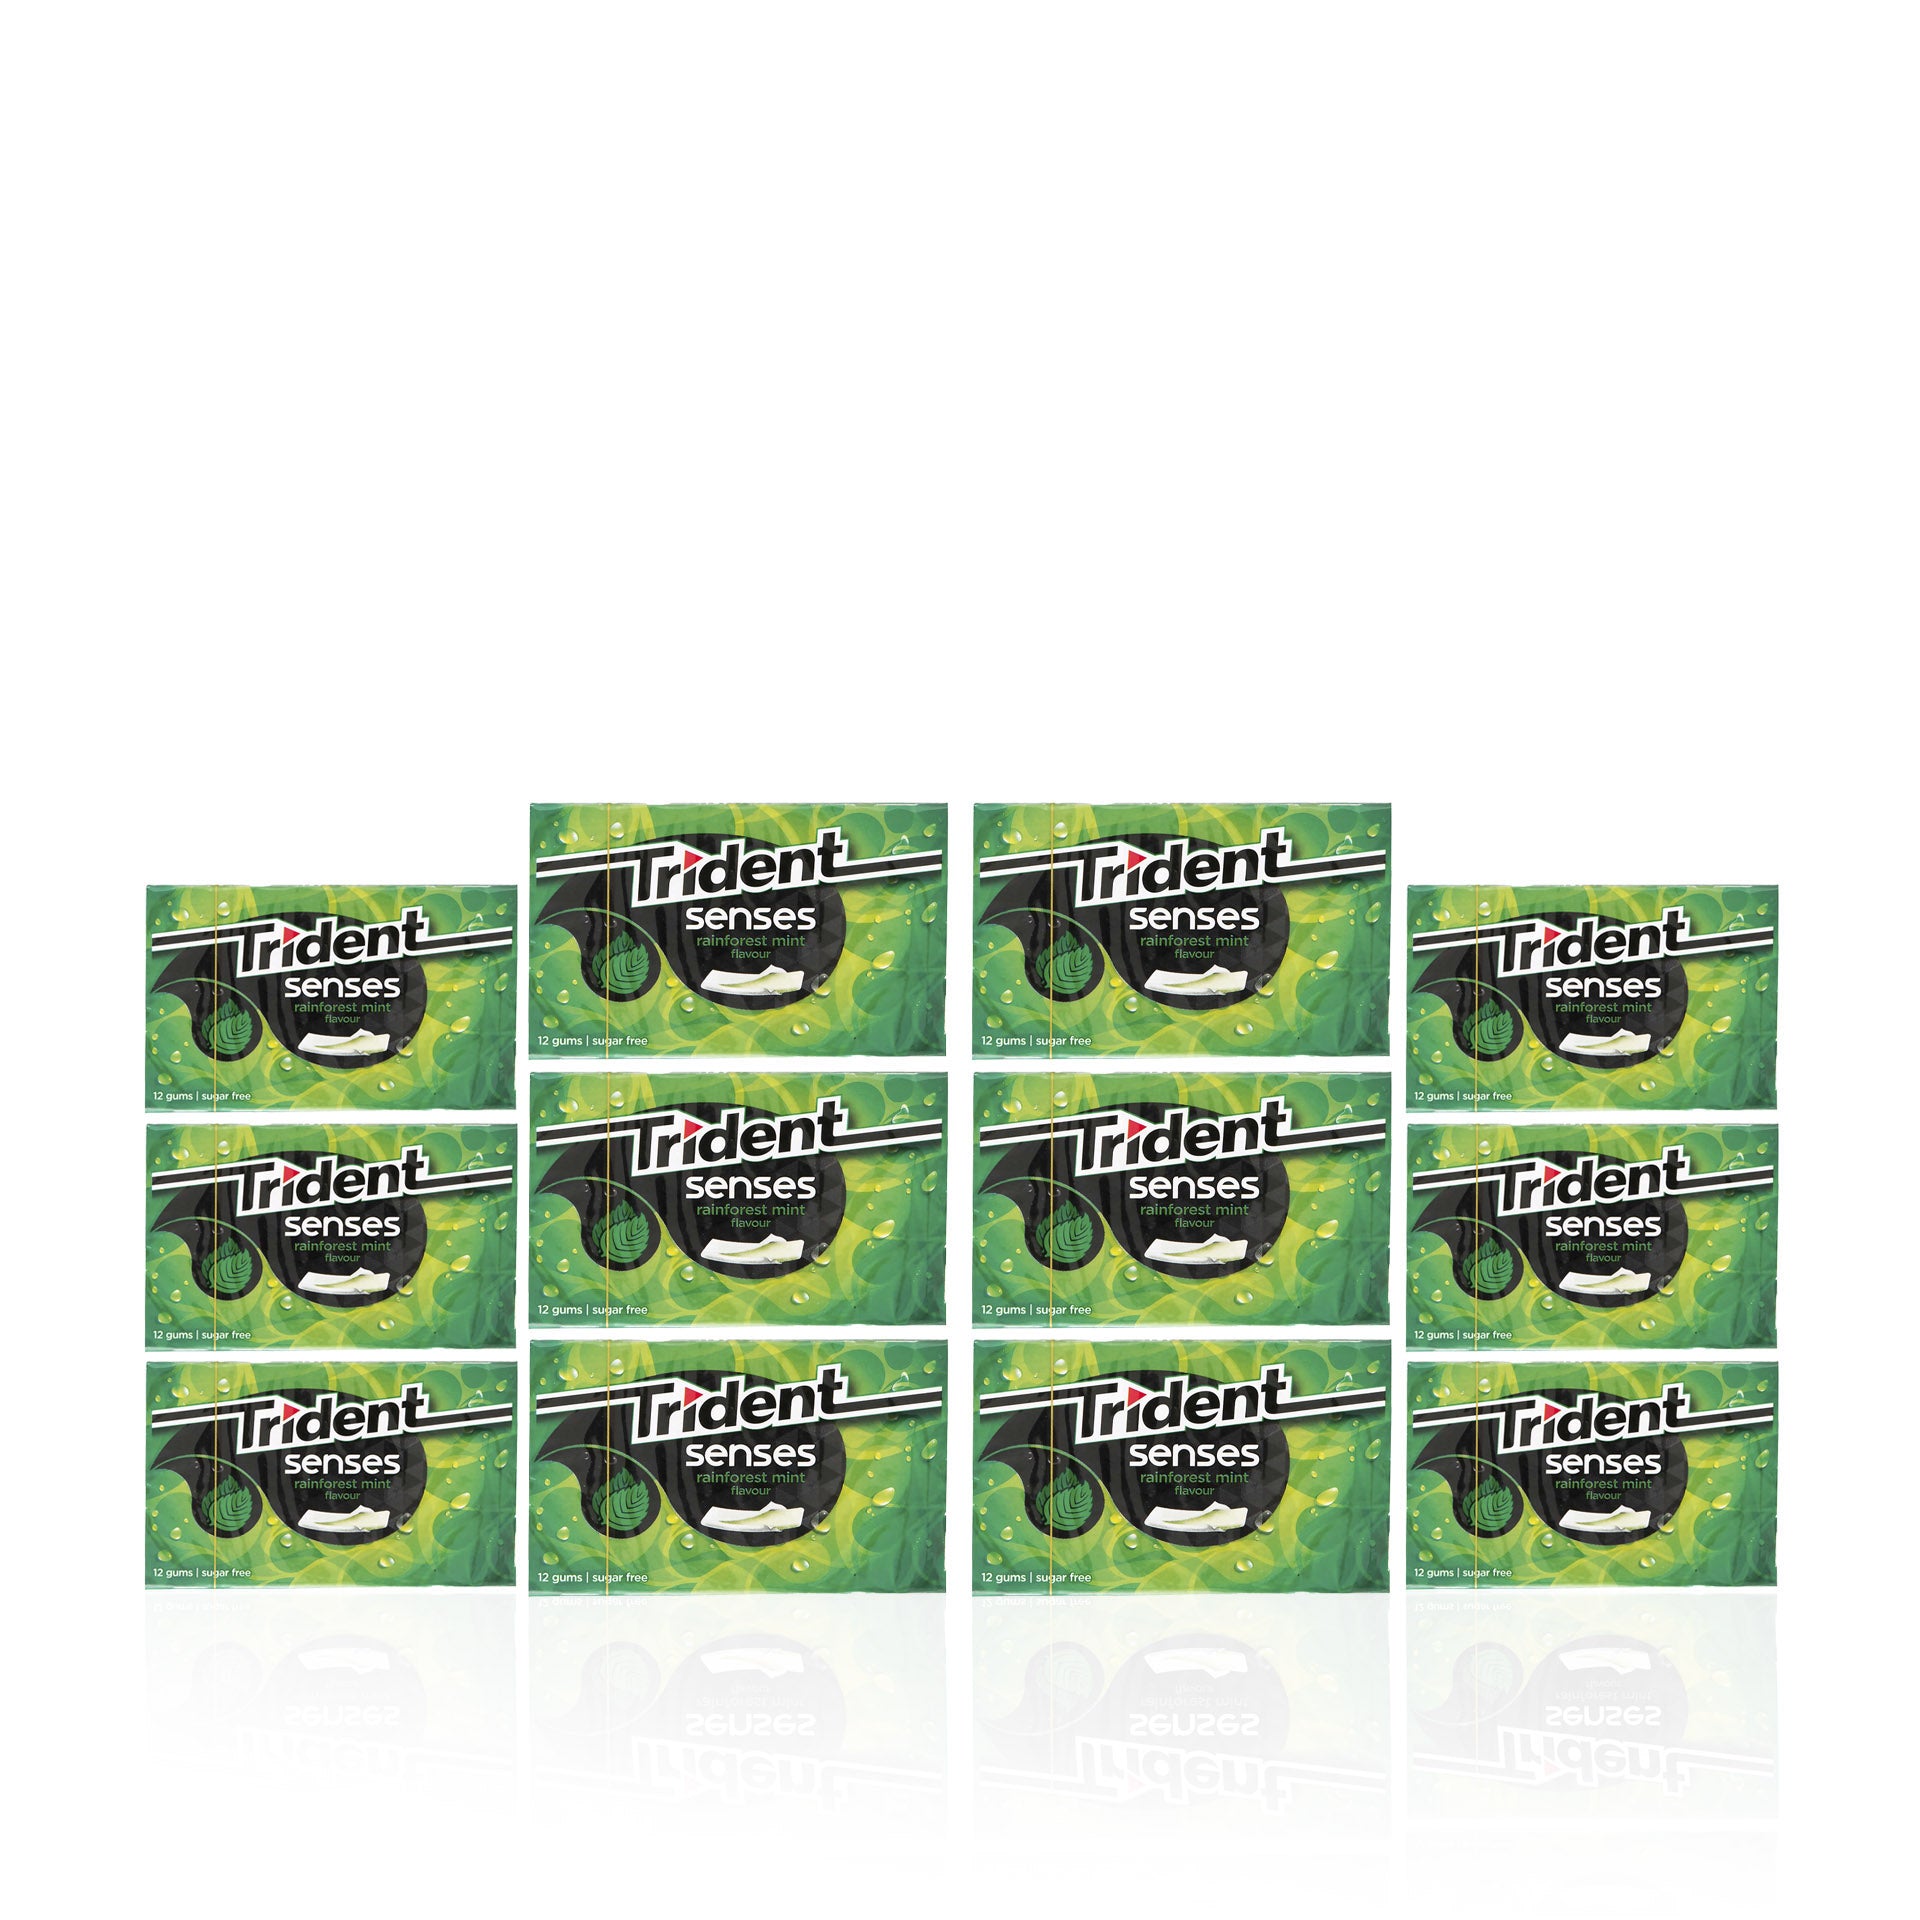 Trident Senses Pastilha Elástica Rainforest 23 gr - Pack 12 x 23 gr